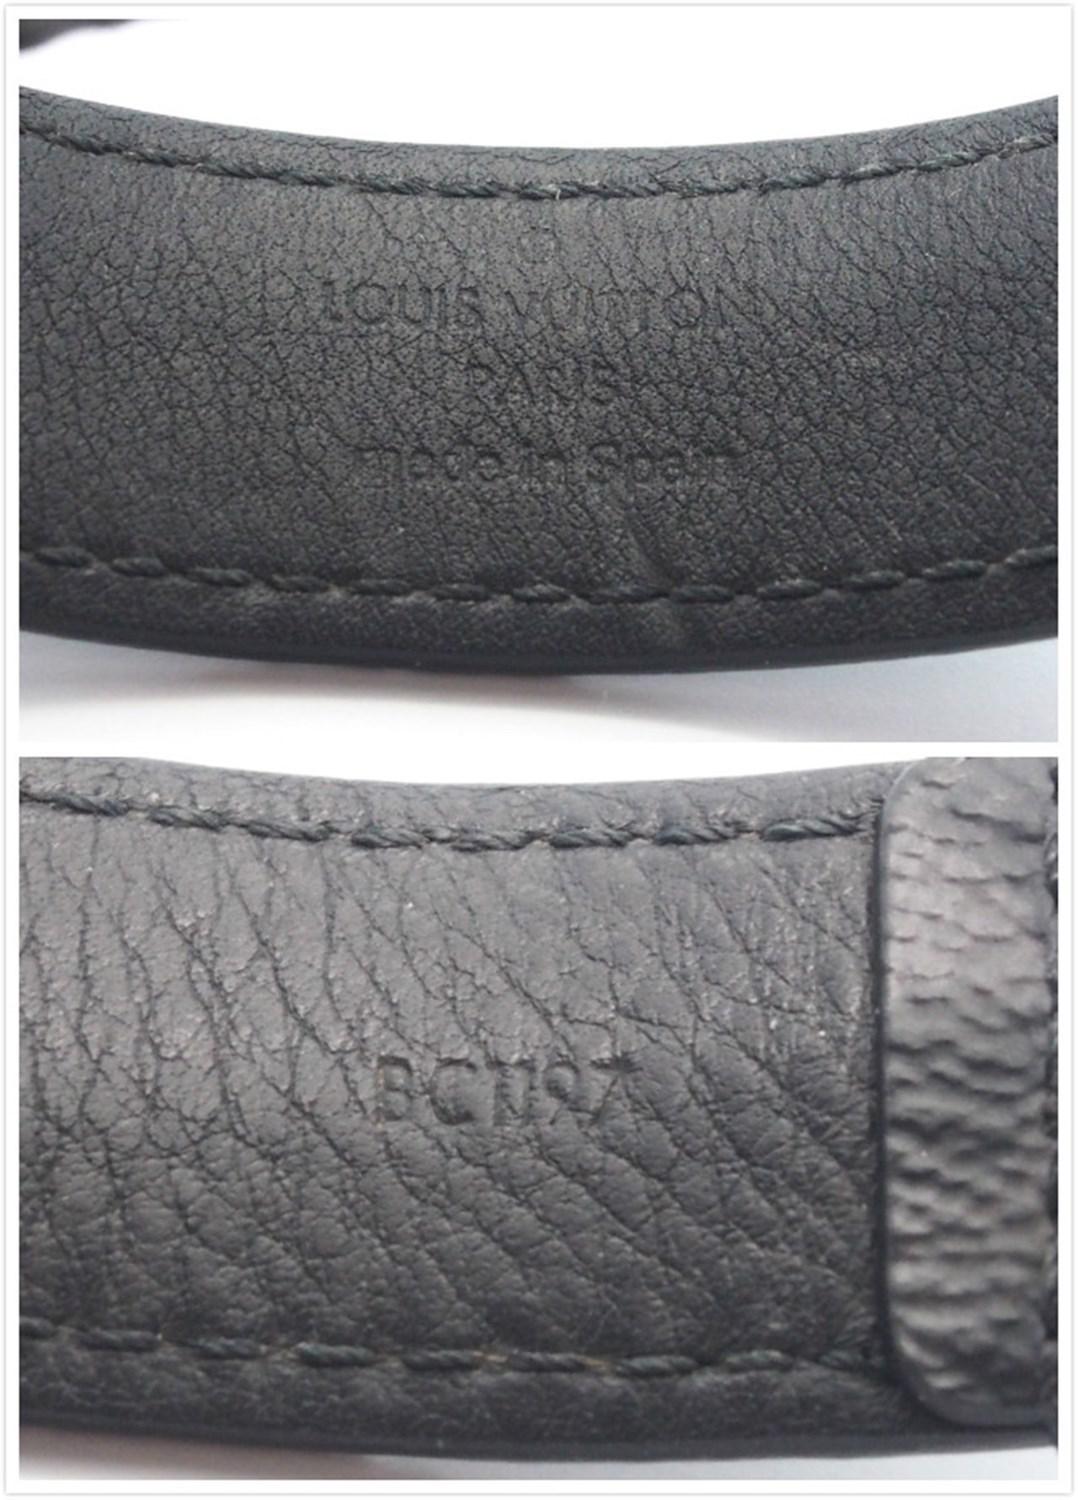 Louis Vuitton Canvas Authentic Monogram Eclipse M6295 Hockenheim Bracelet Size 21 17032053ck in ...